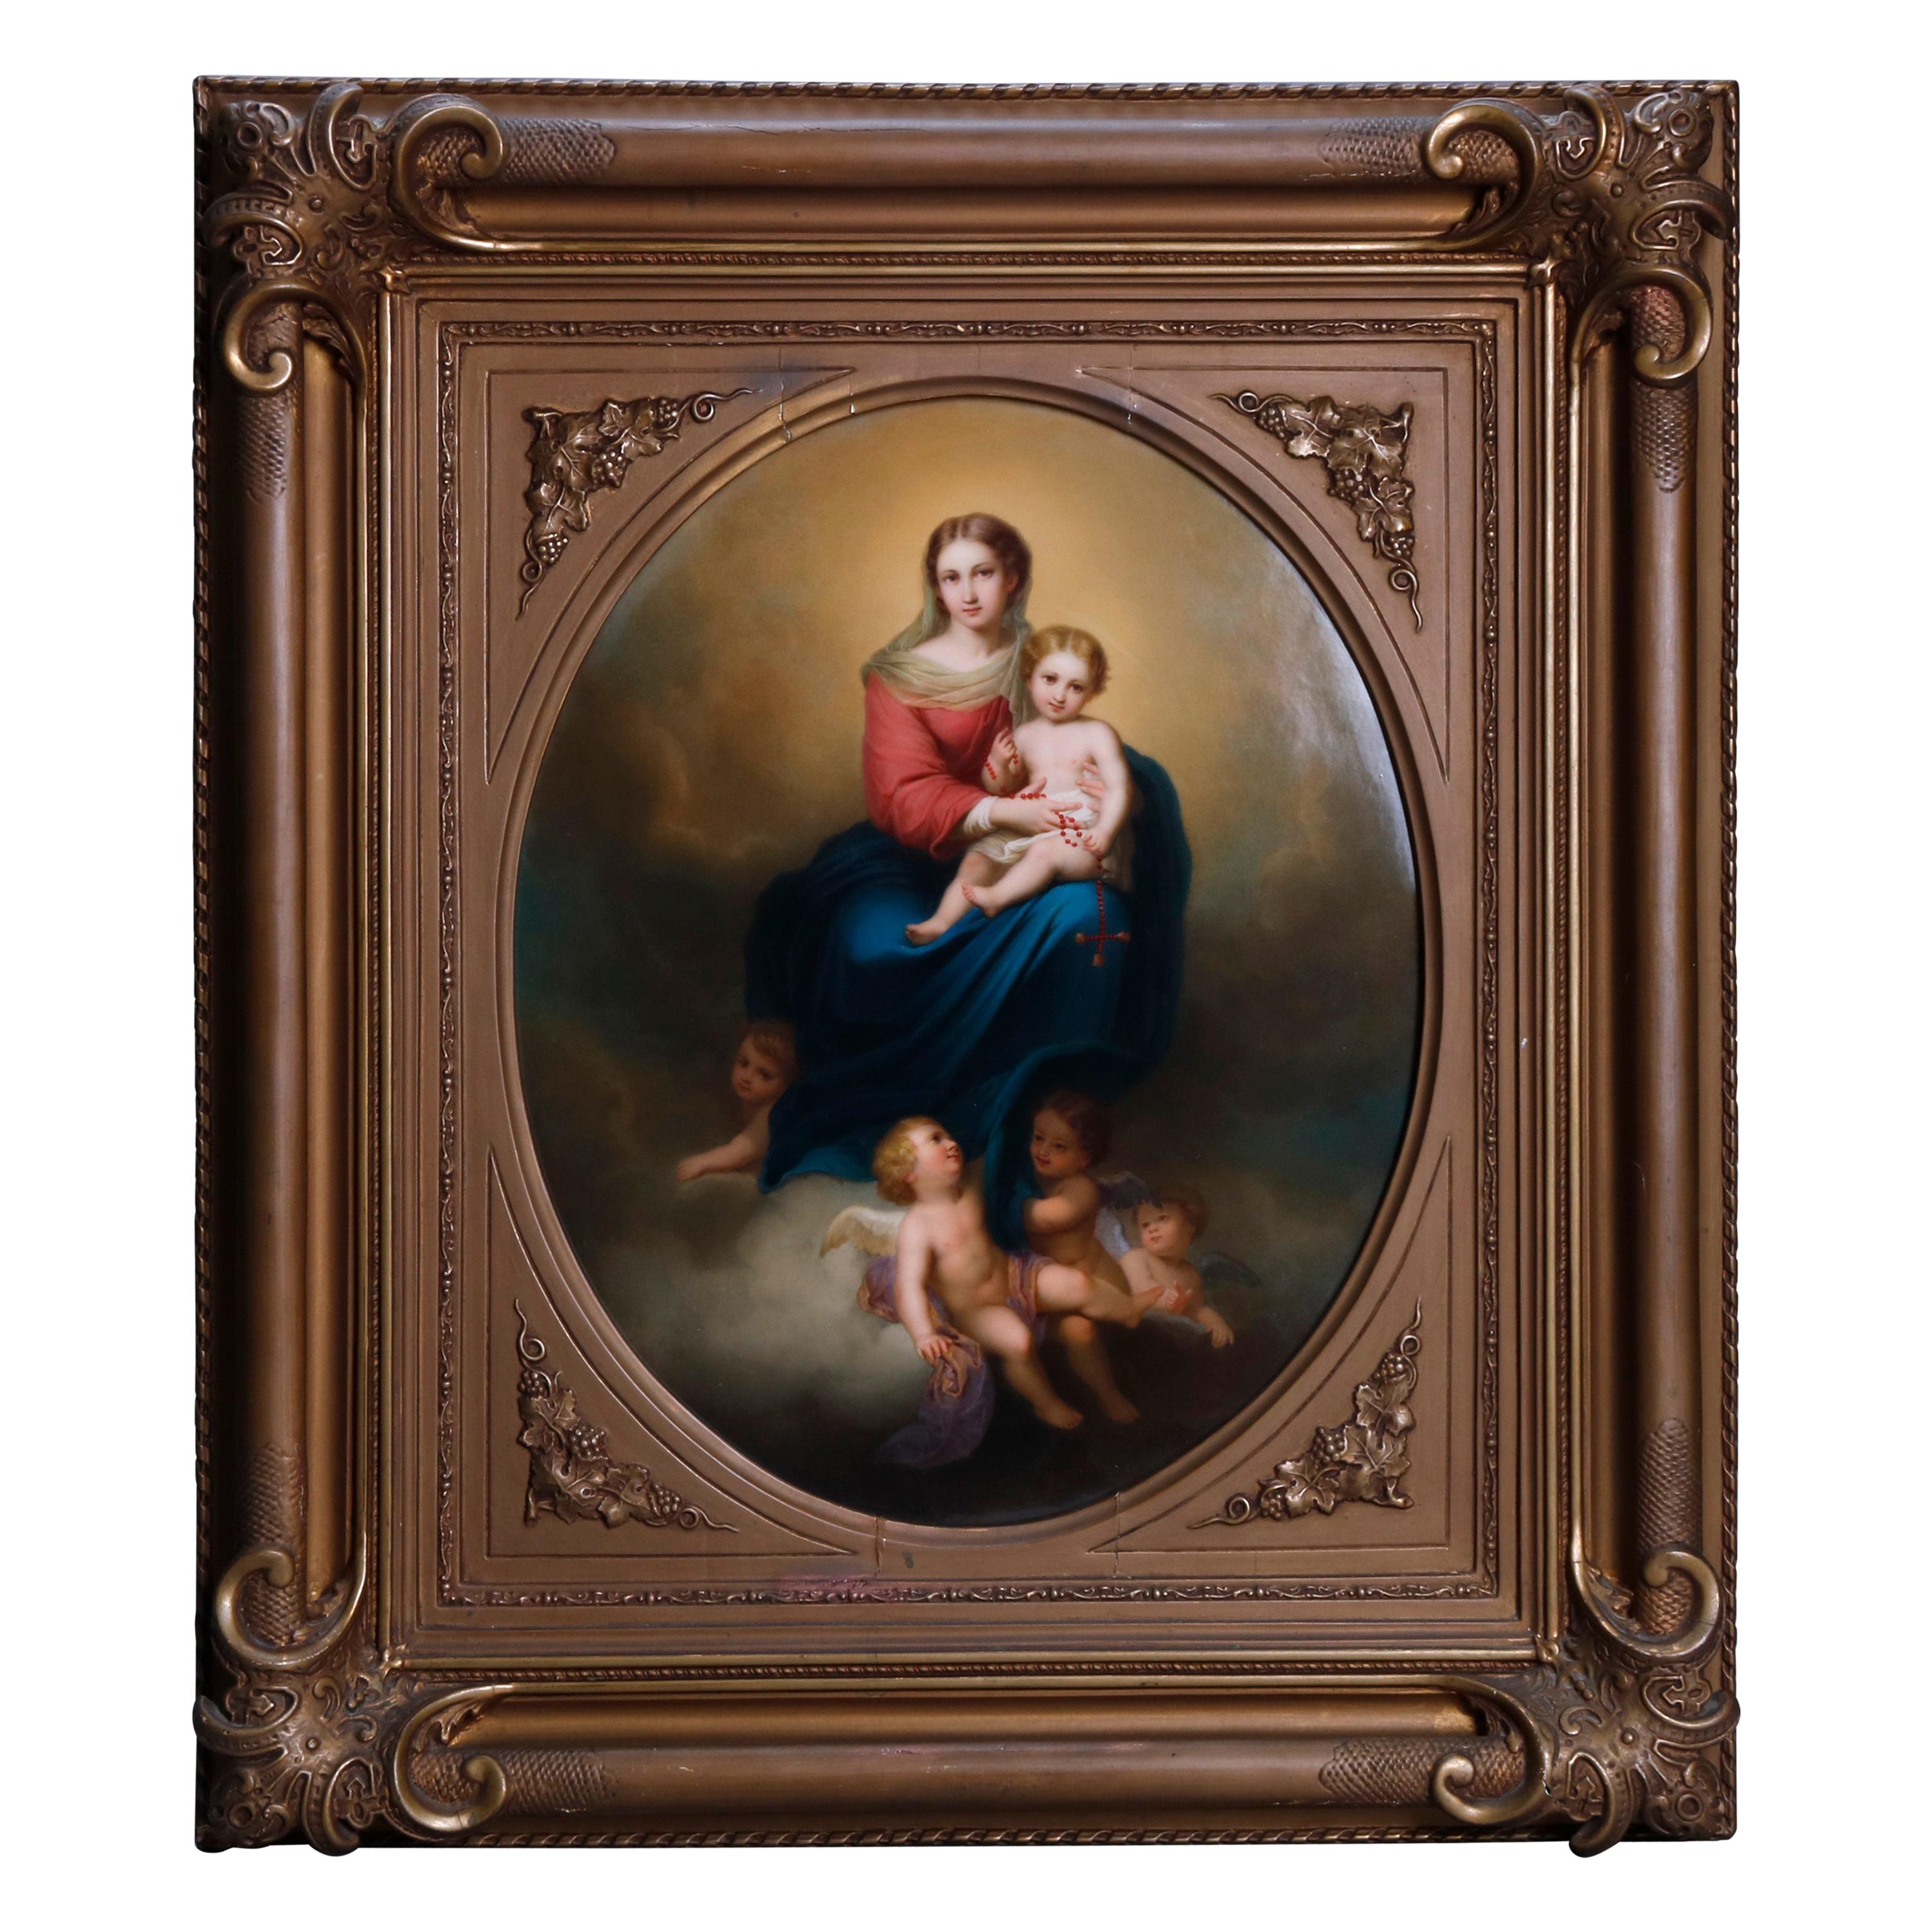 Oversized KPM Porcelain Plaque, The Madonna & Christ Child, after Murillo c1890